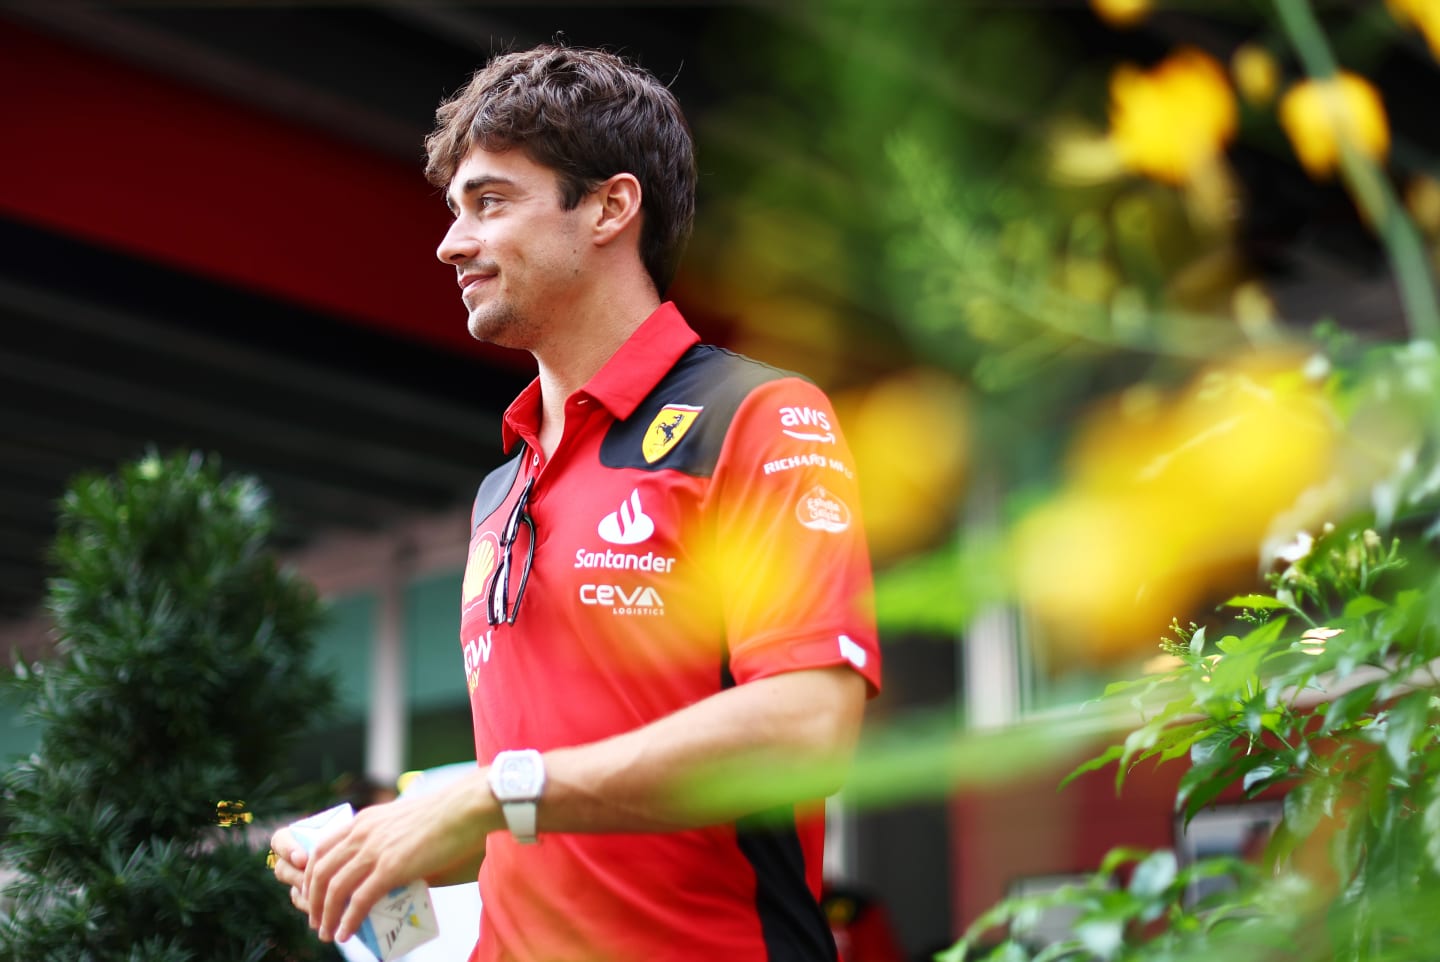 SINGAPORE, SINGAPORE - SEPTEMBER 14: Charles Leclerc of Monaco and Ferrari walks in the Paddock